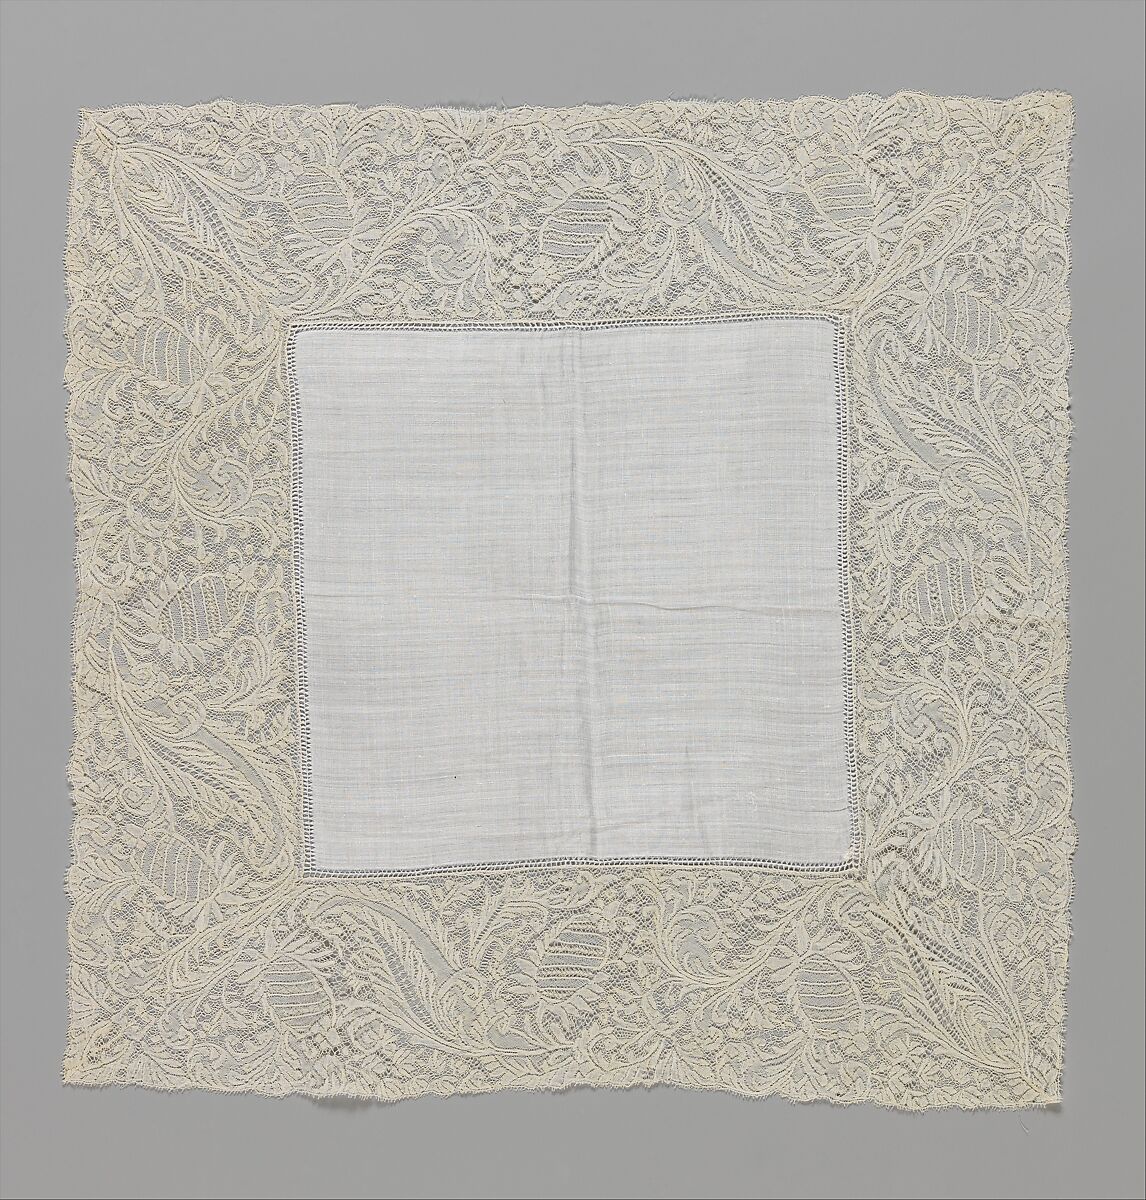 Handkerchief, Plain weave and bobbin lace; warp: undyed linen, Z spun, 42 per cm; weft: undyed linen, Z spun, 26 per cm; lace: undyed linen, 2 Z spun, S plied, Belgian 